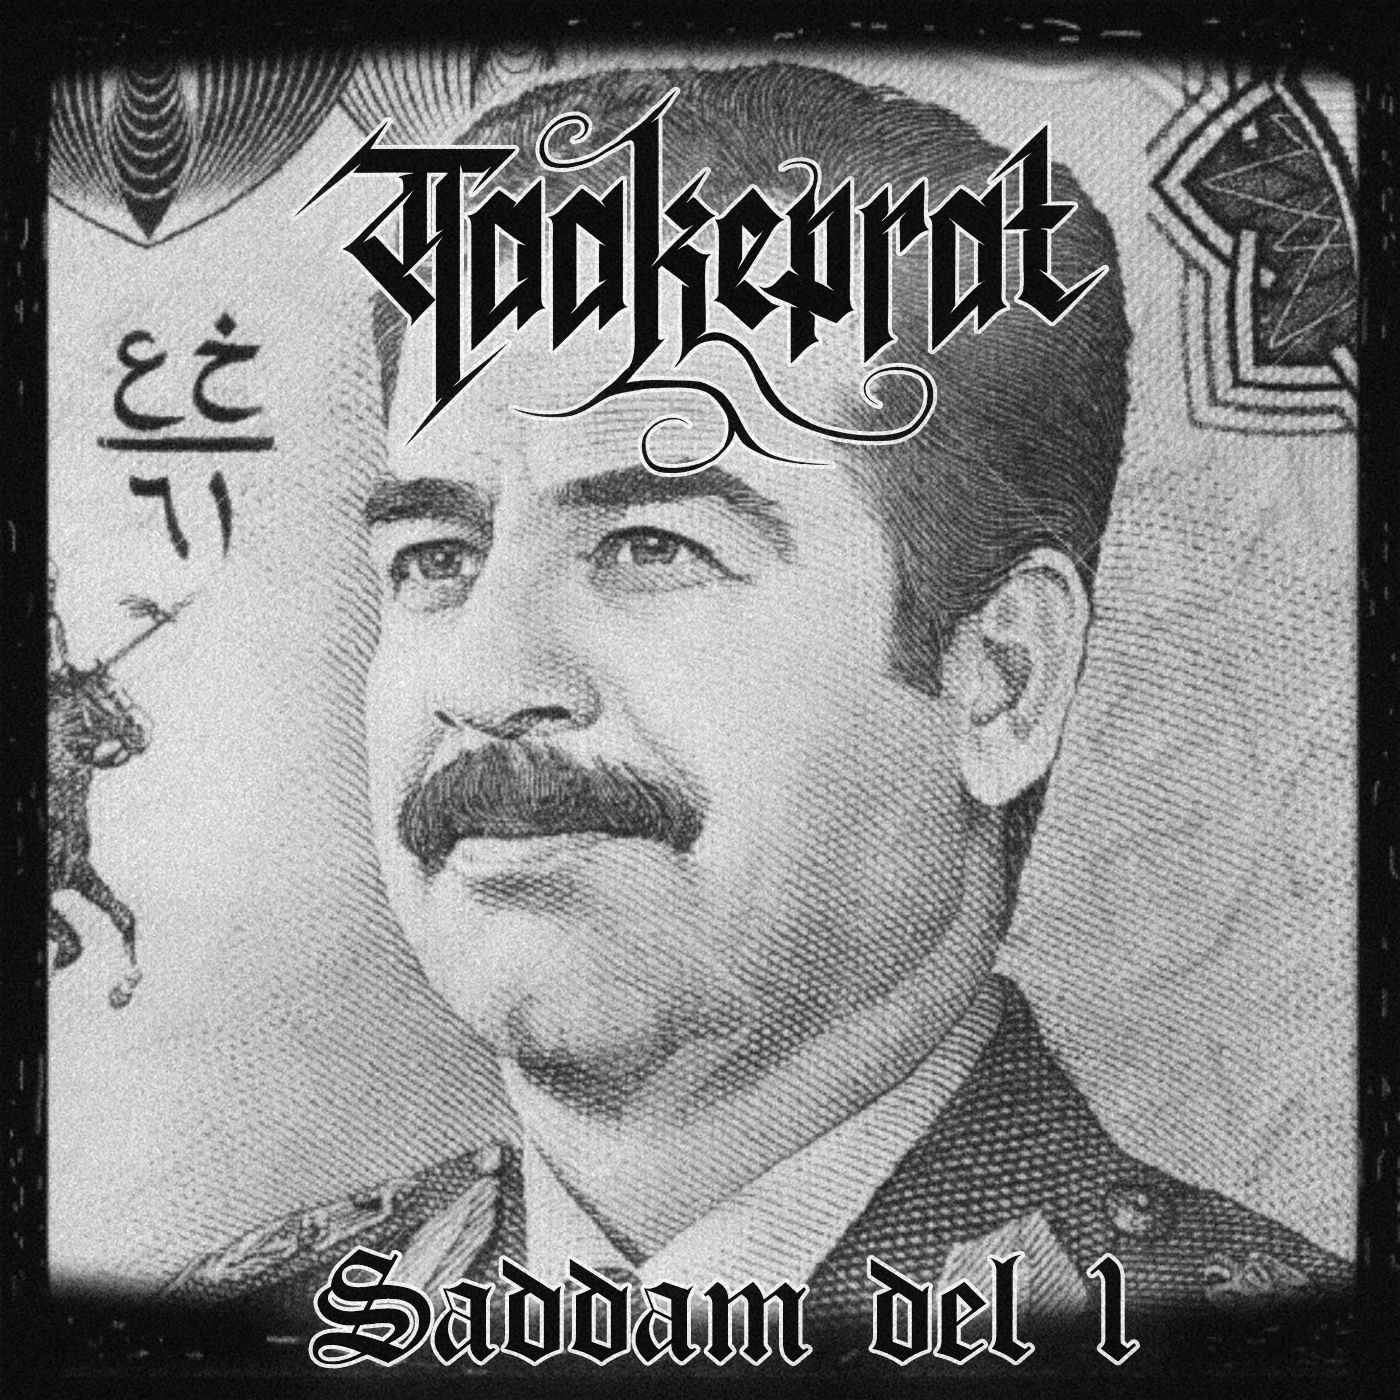 Episode 175 - Saddam del 1